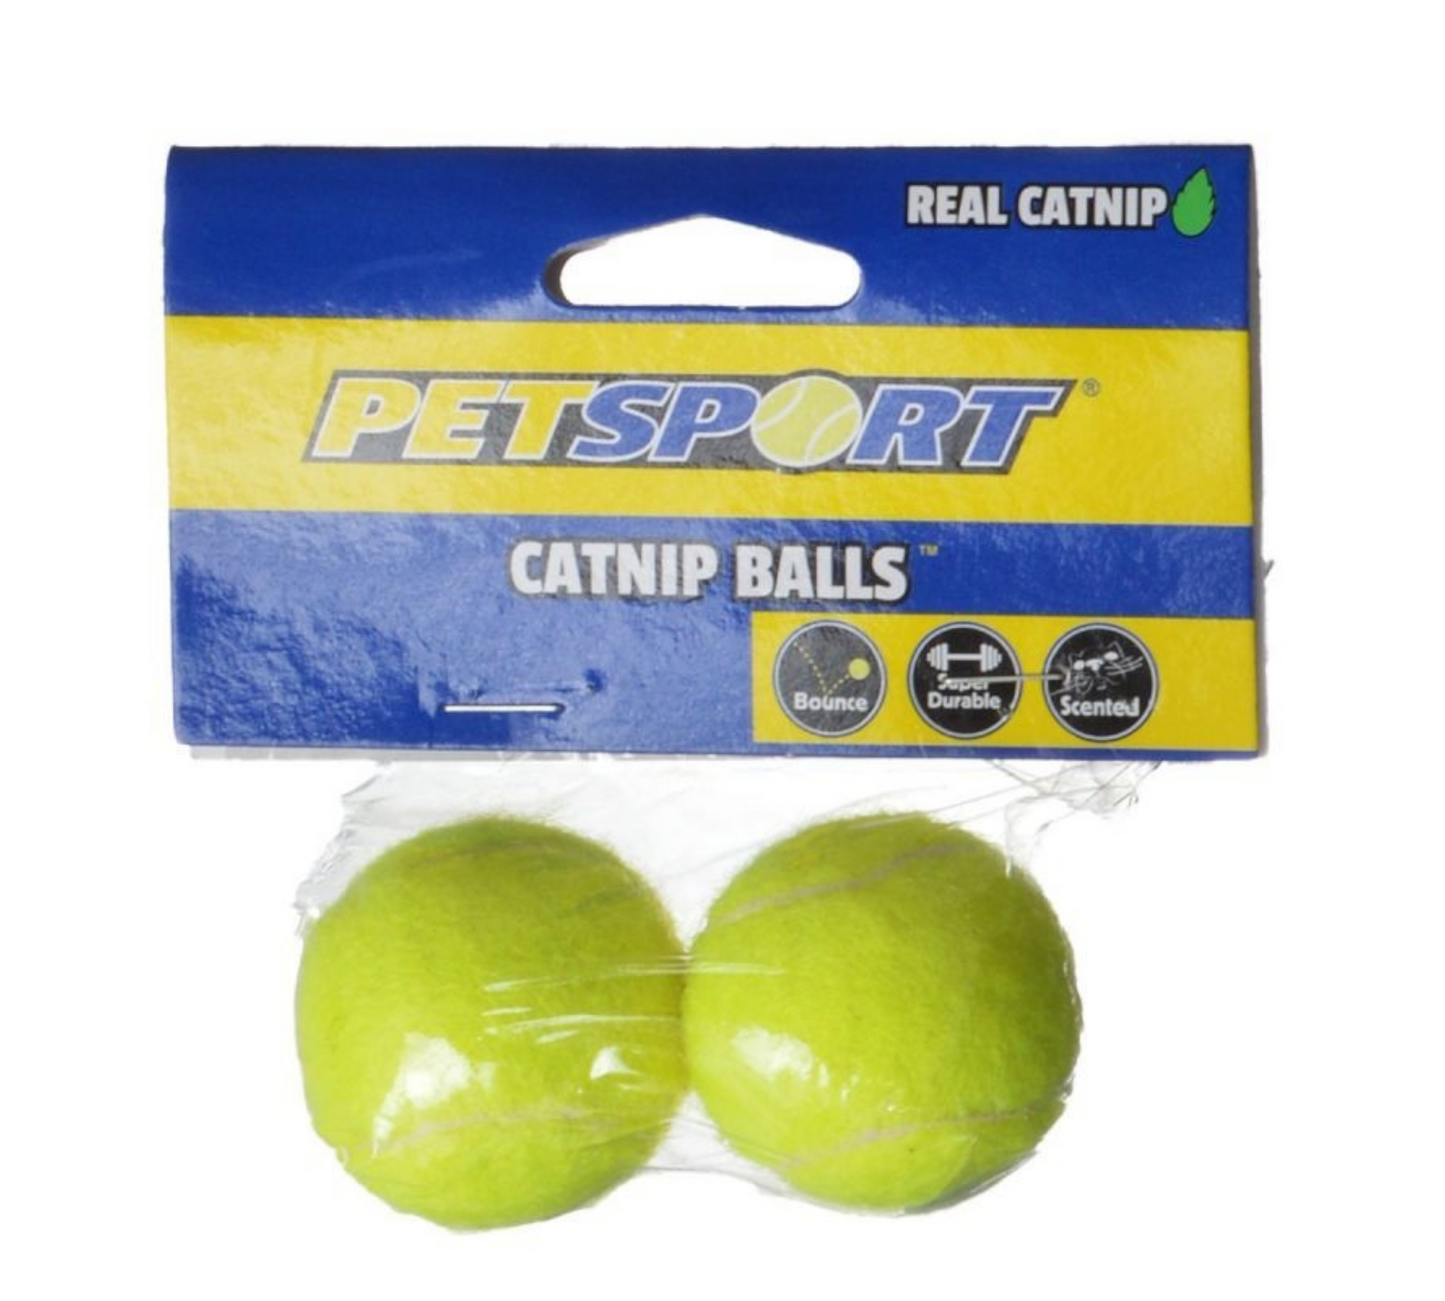 Canine's World Cat Balls & Chaser Toys Petsport USA Catnip Balls Petsport USA